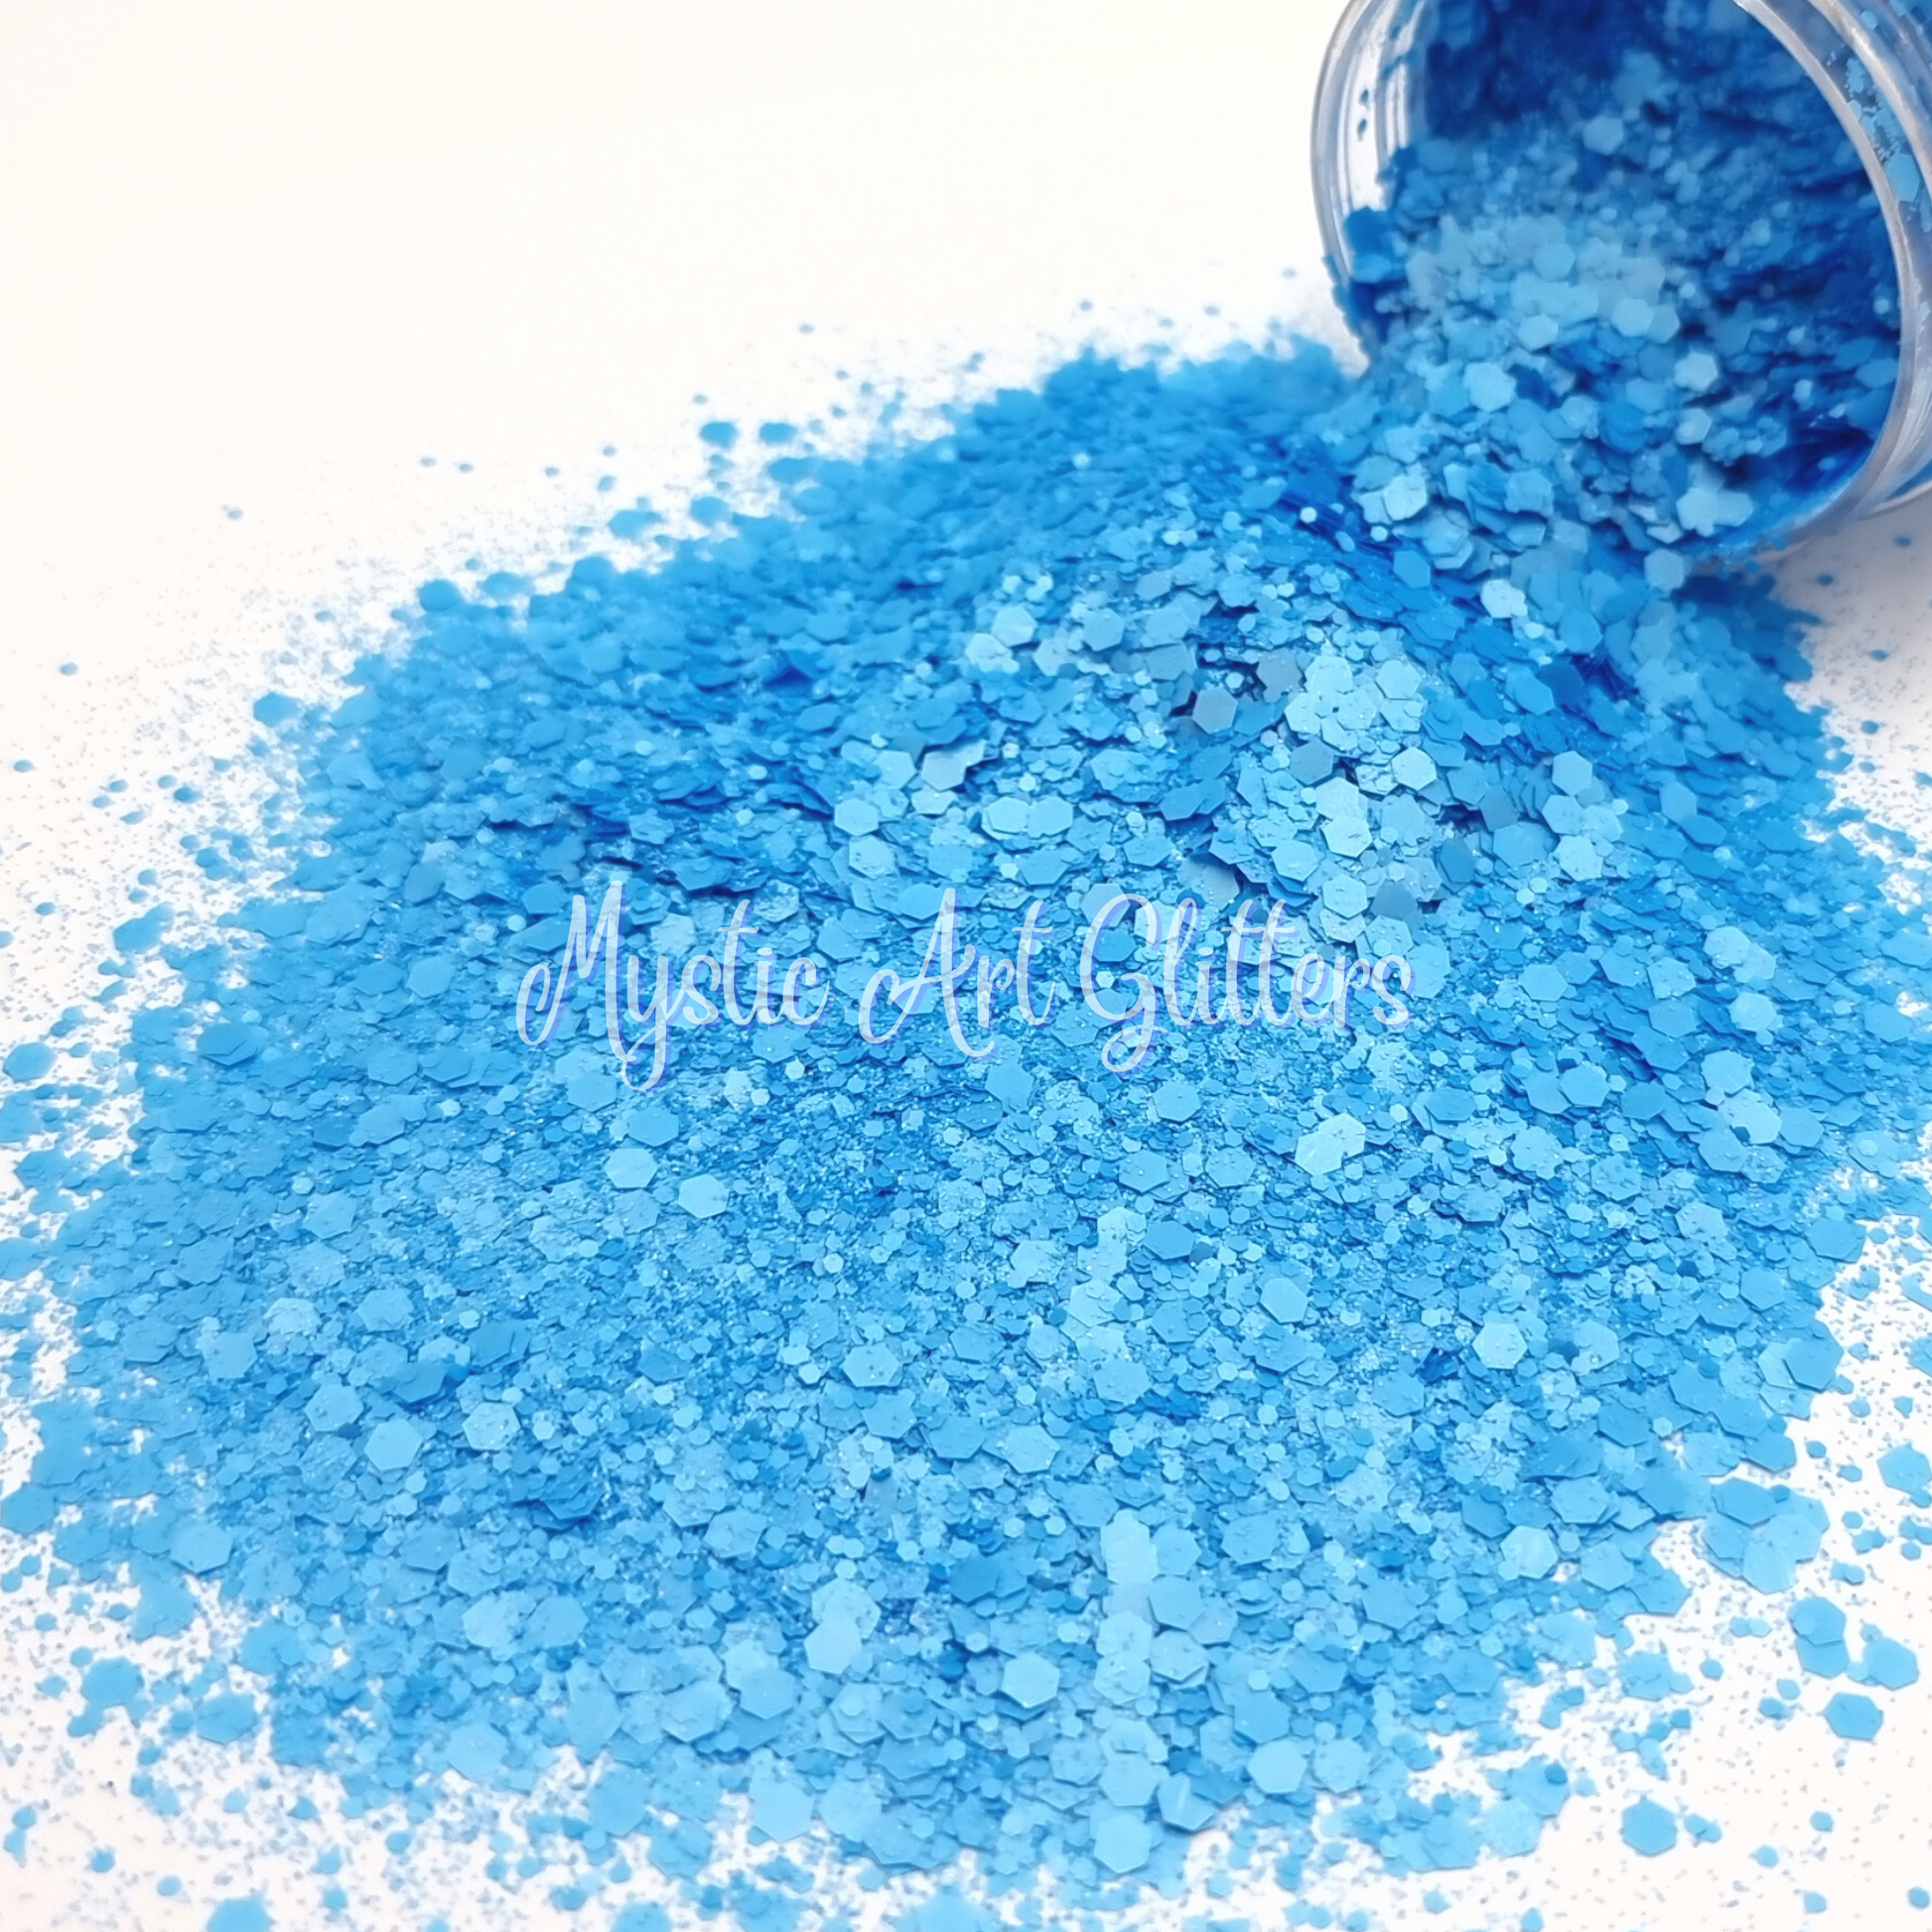 Blue's Clues Chunky Glitter Mix